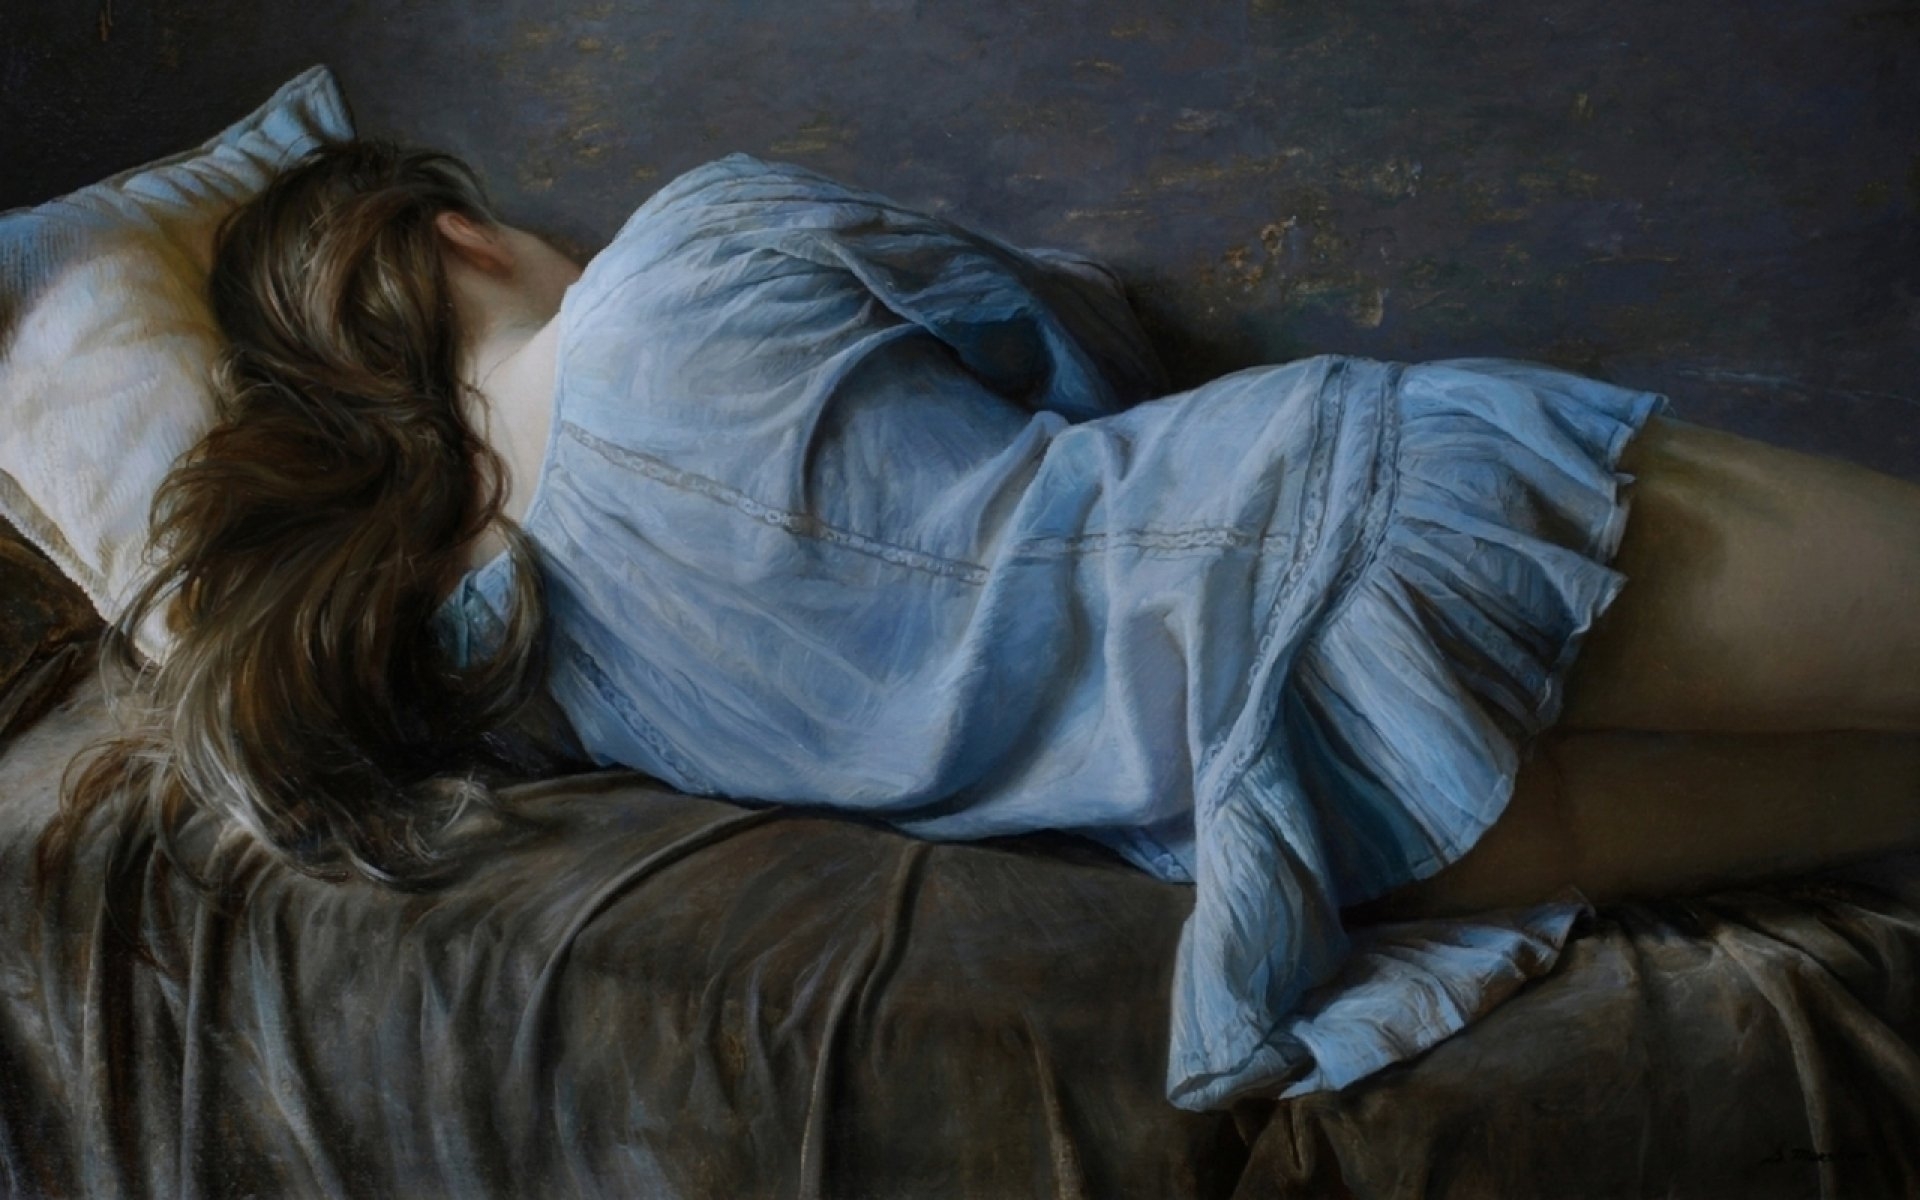 General 1920x1200 Serge Marshennikov women sleeping painting digital art lying down lying on side long hair pillow bed